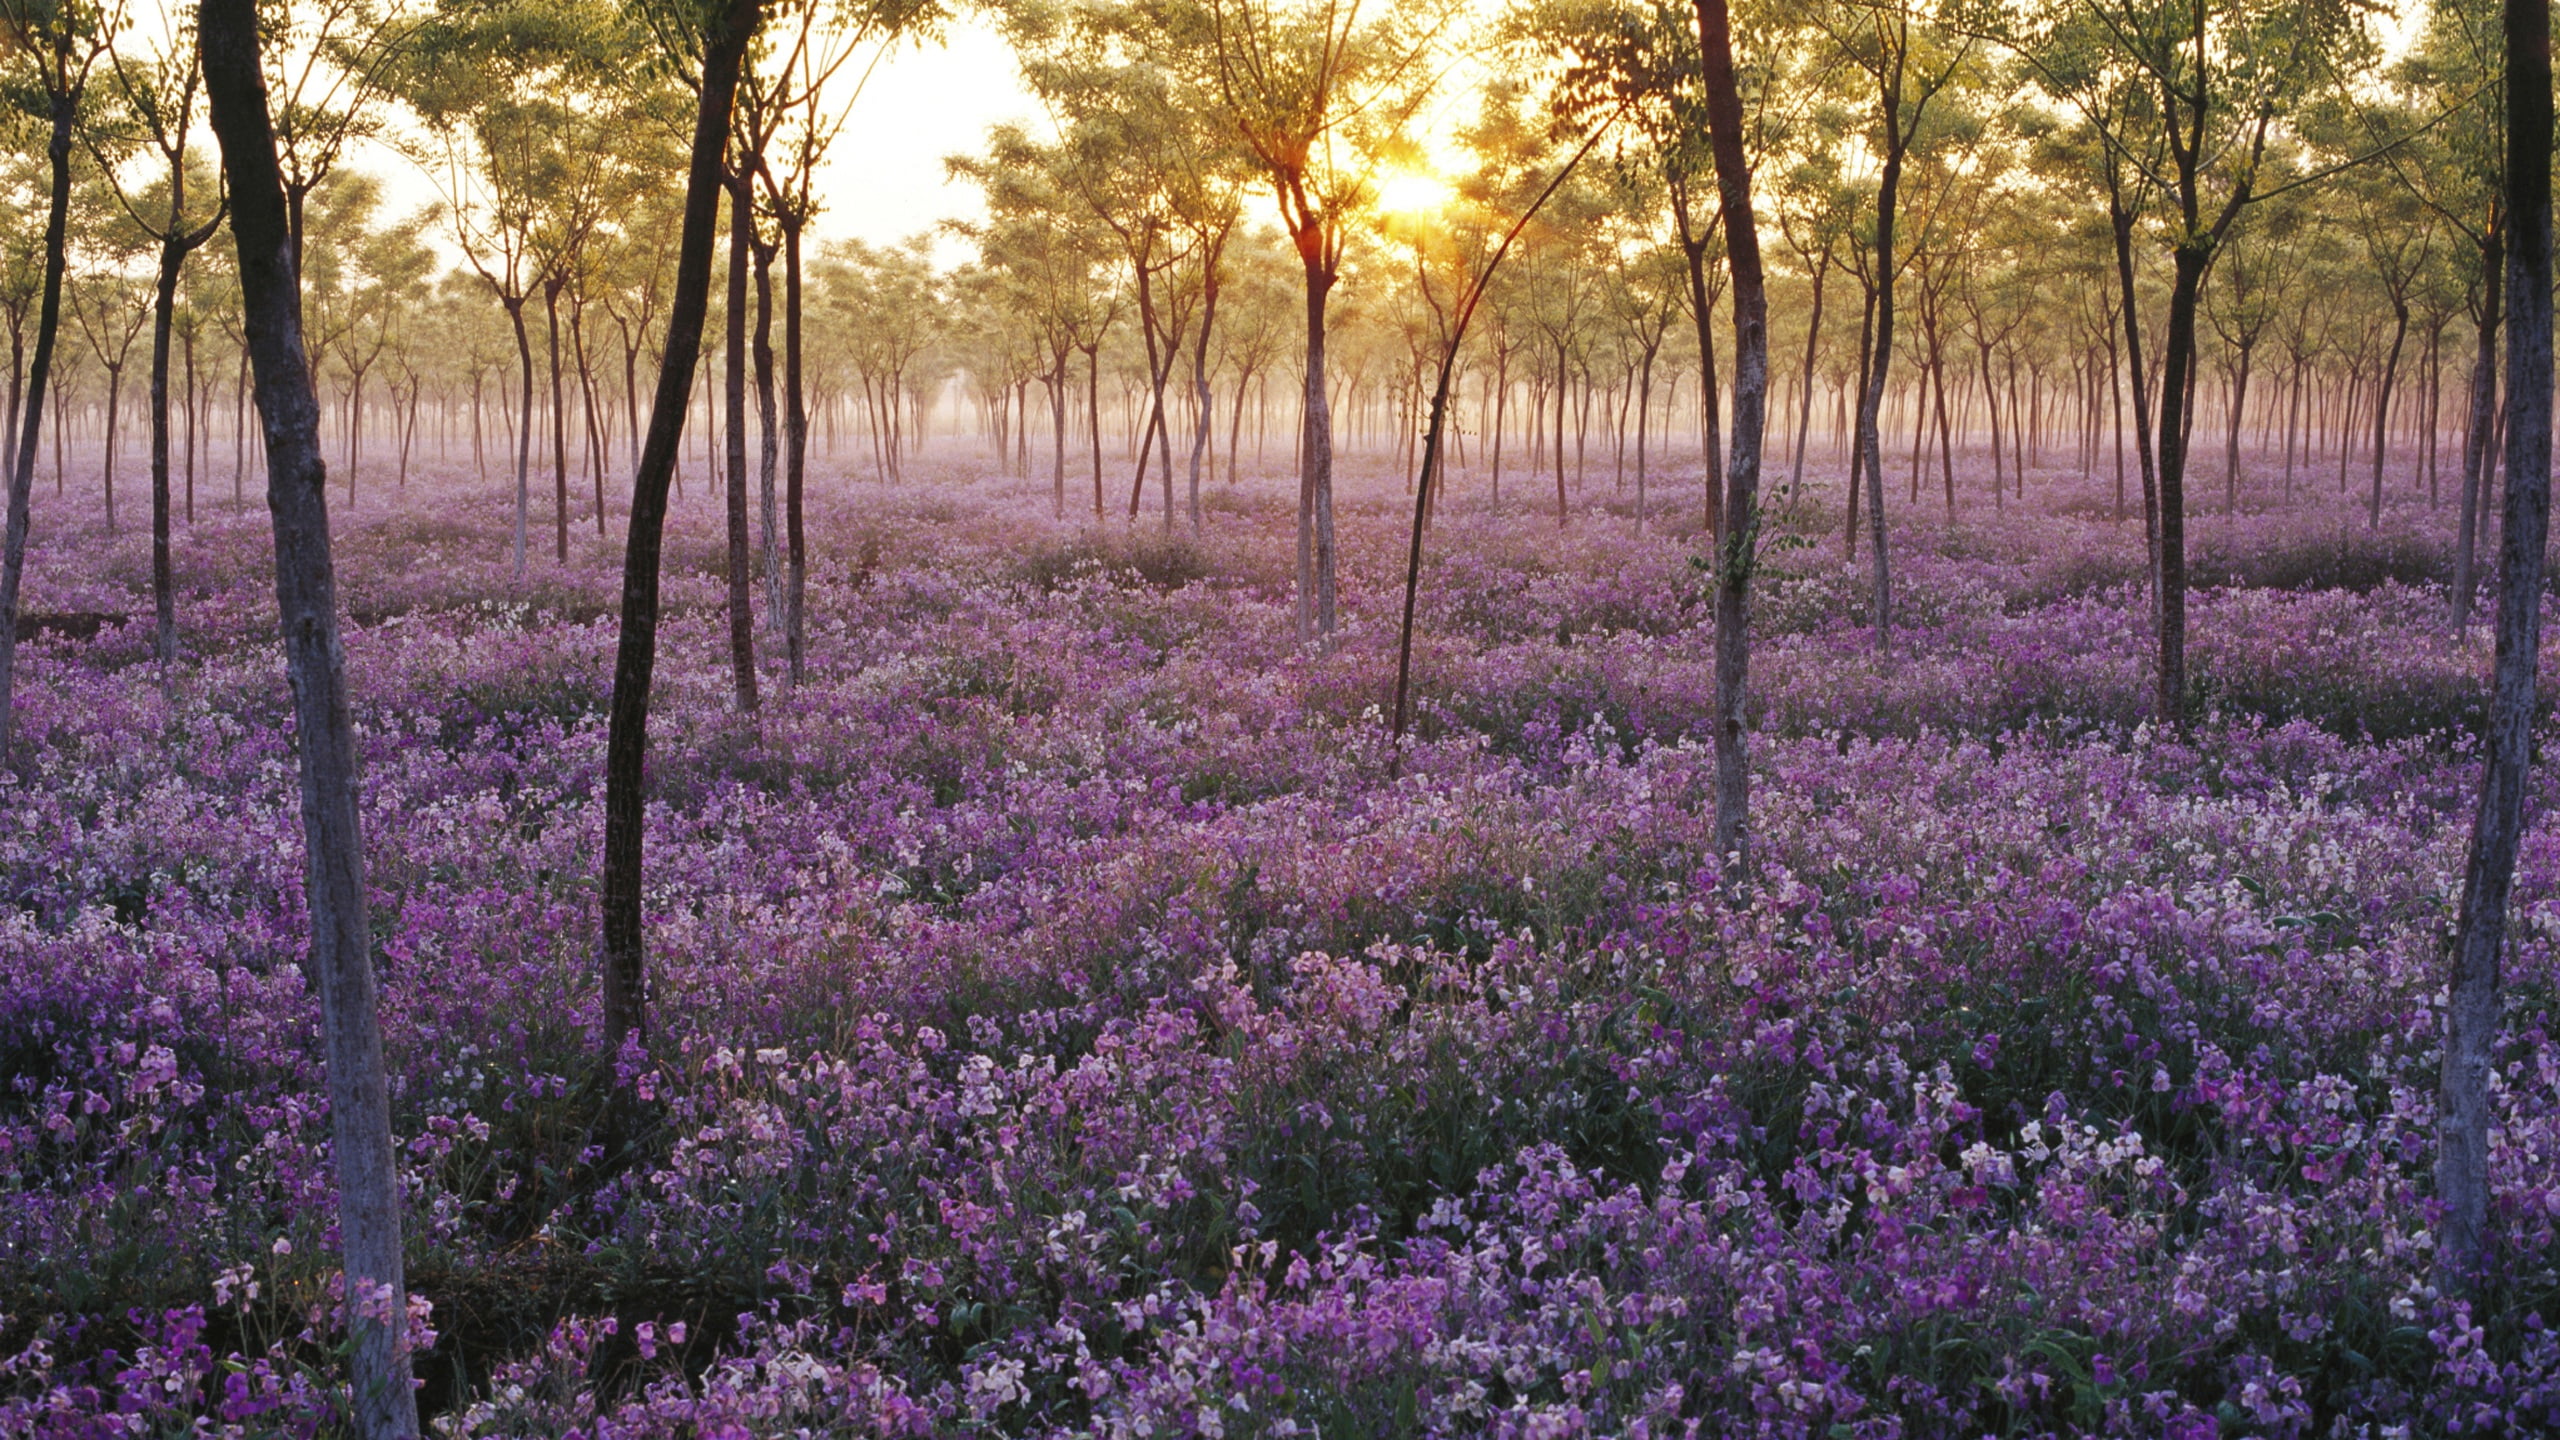 purple petaled flower field near trees during golden hour